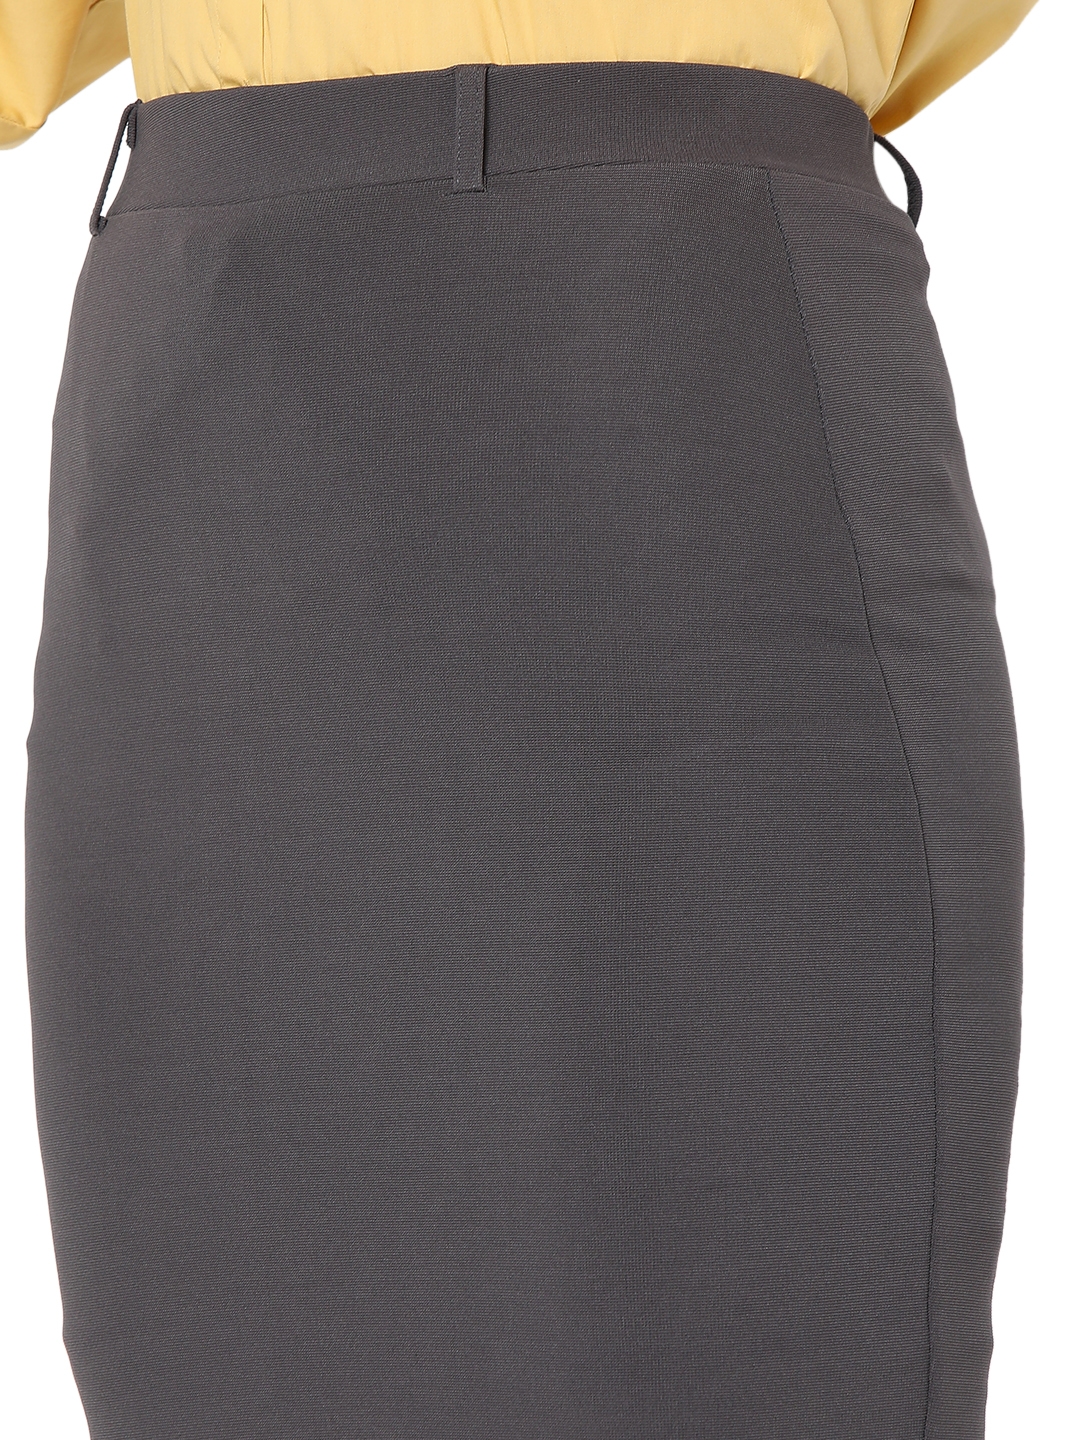 Smarty Pants | Smarty Pants women's cotton lycra grey color pencil skirt. 4